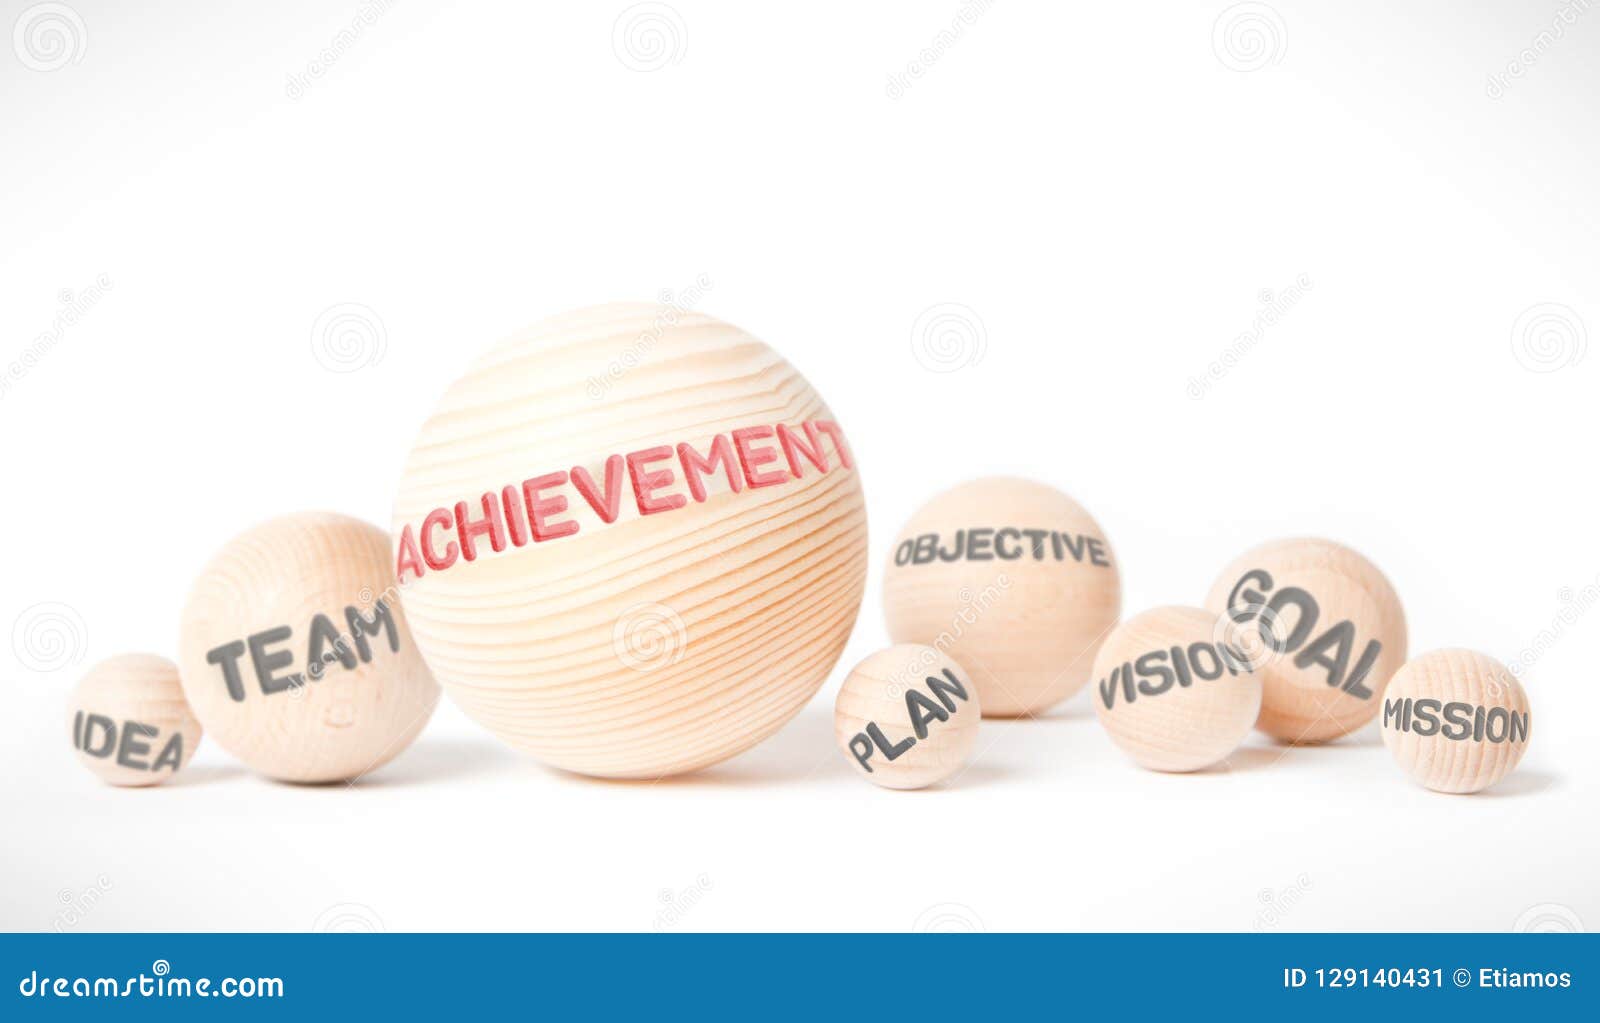 wooden balls with achievement concept